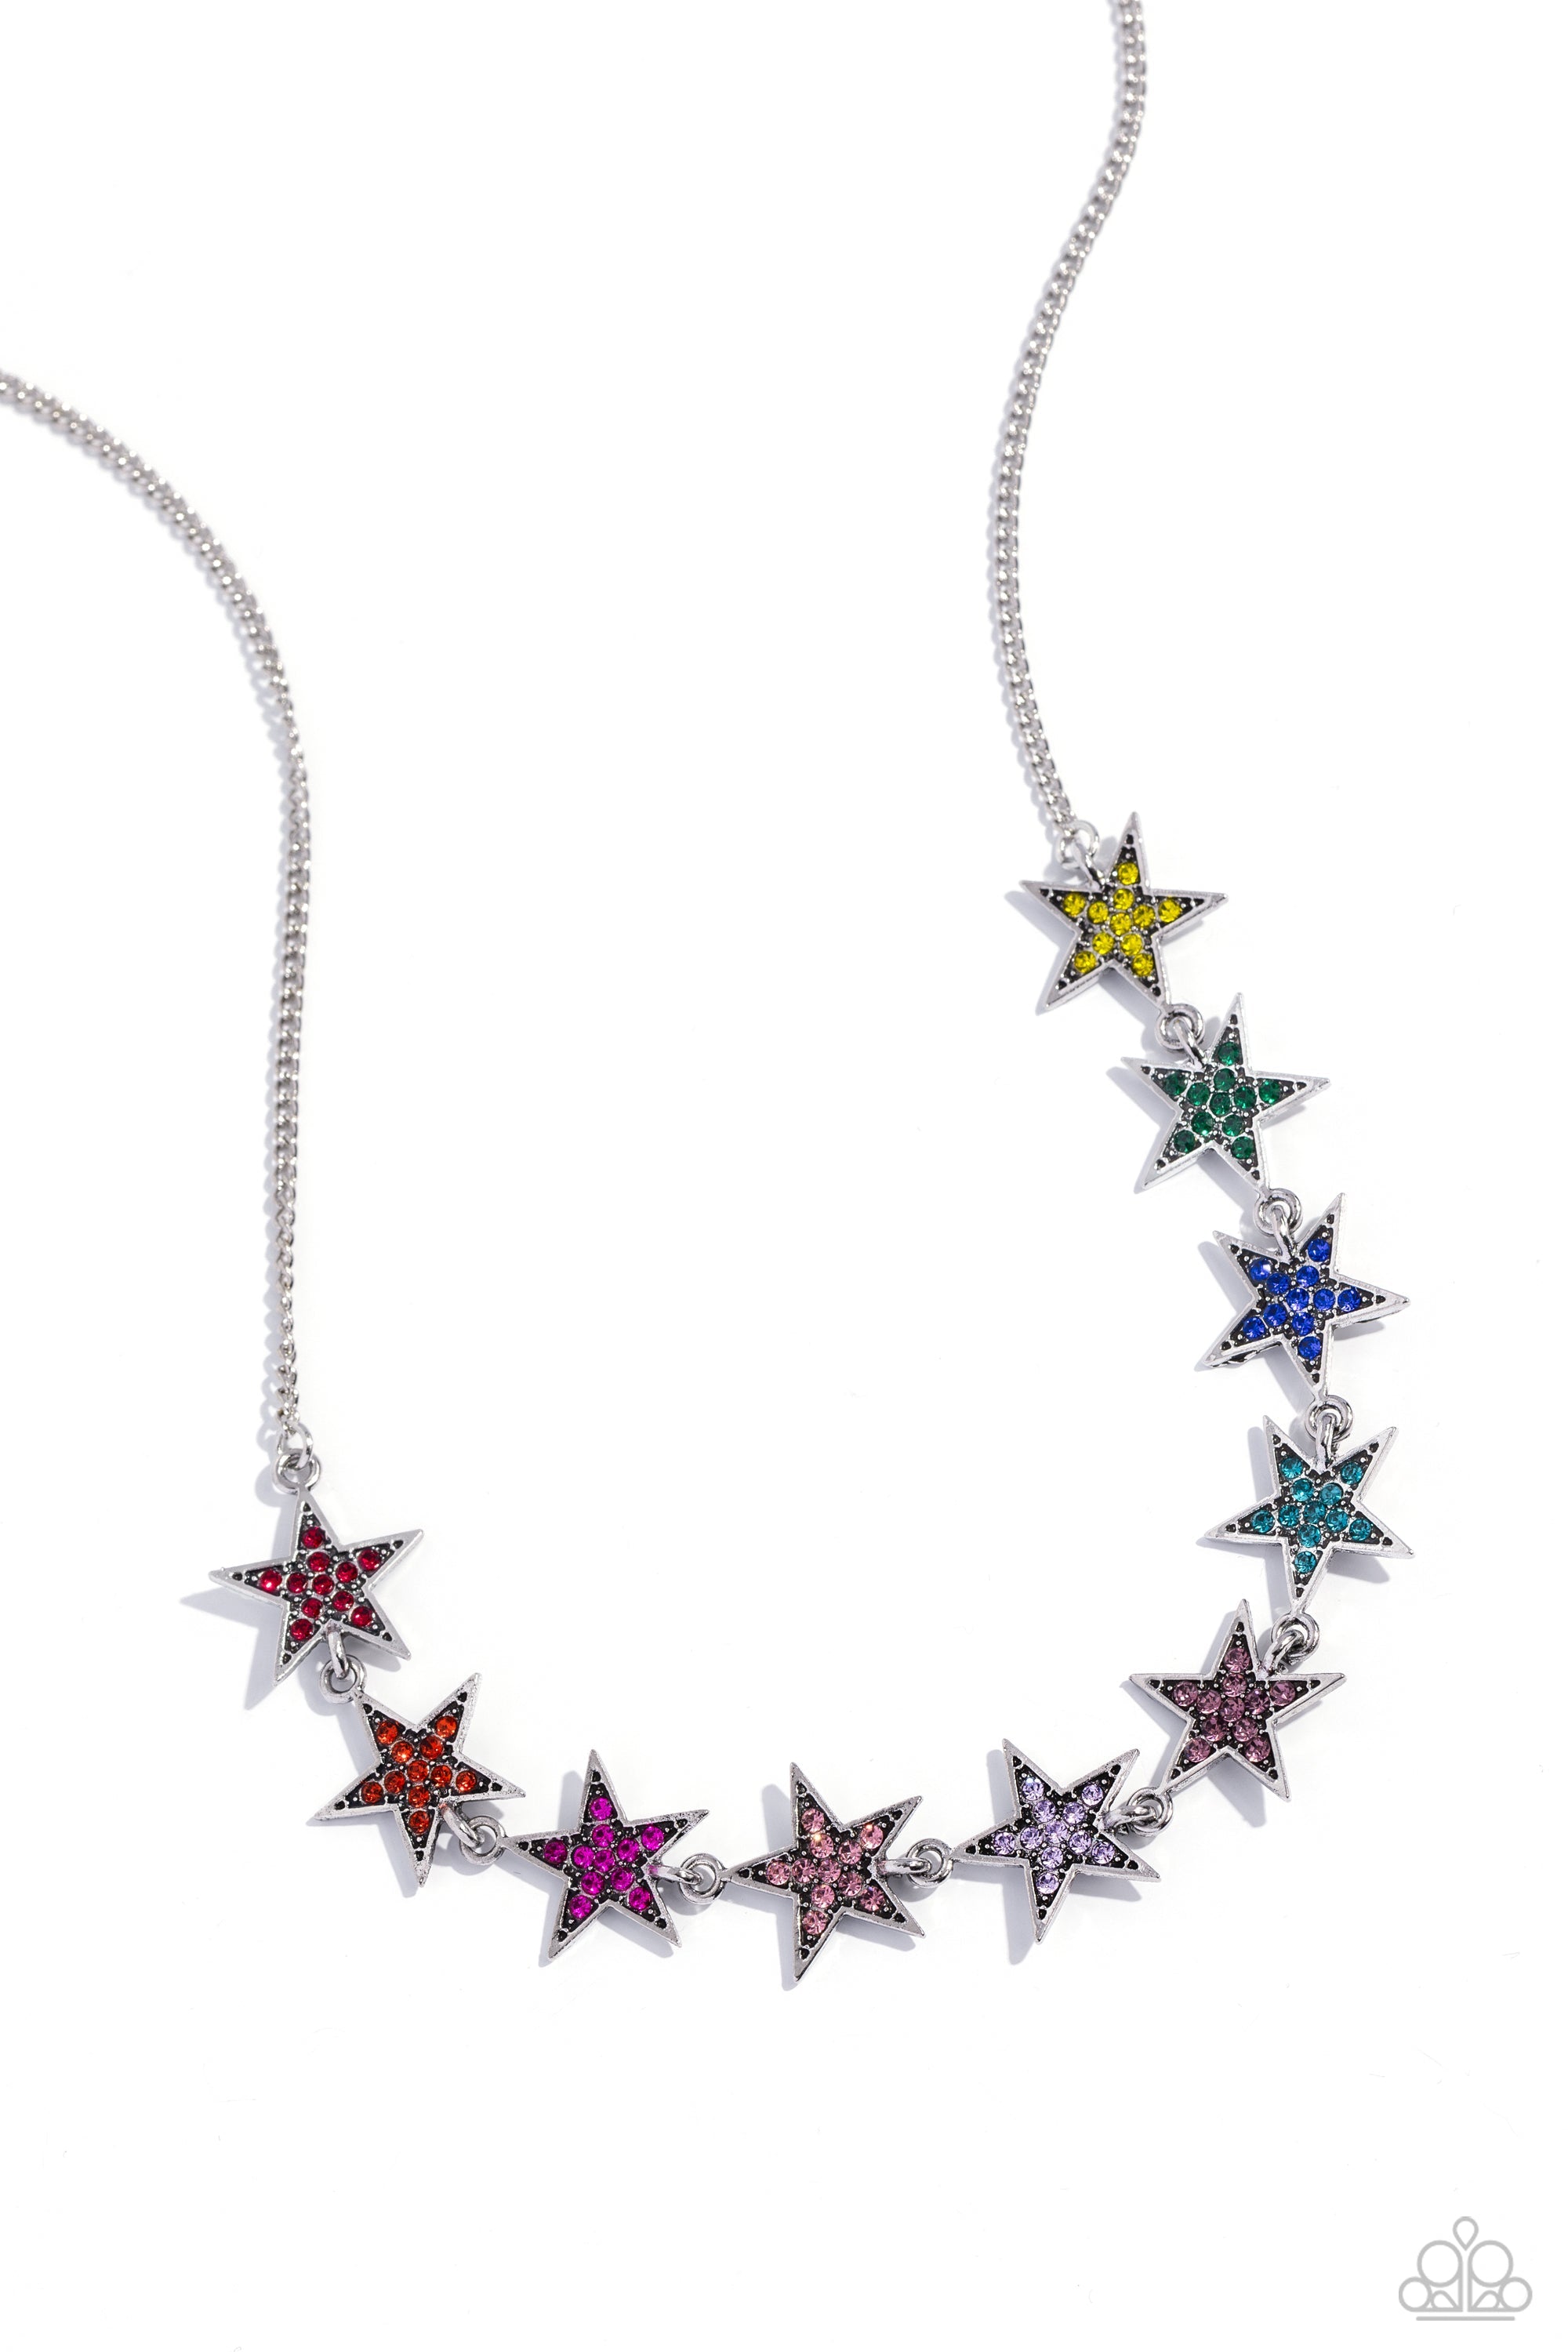 Star Quality Sensation Multi Rhinestone Necklace - Paparazzi Accessories- lightbox - CarasShop.com - $5 Jewelry by Cara Jewels